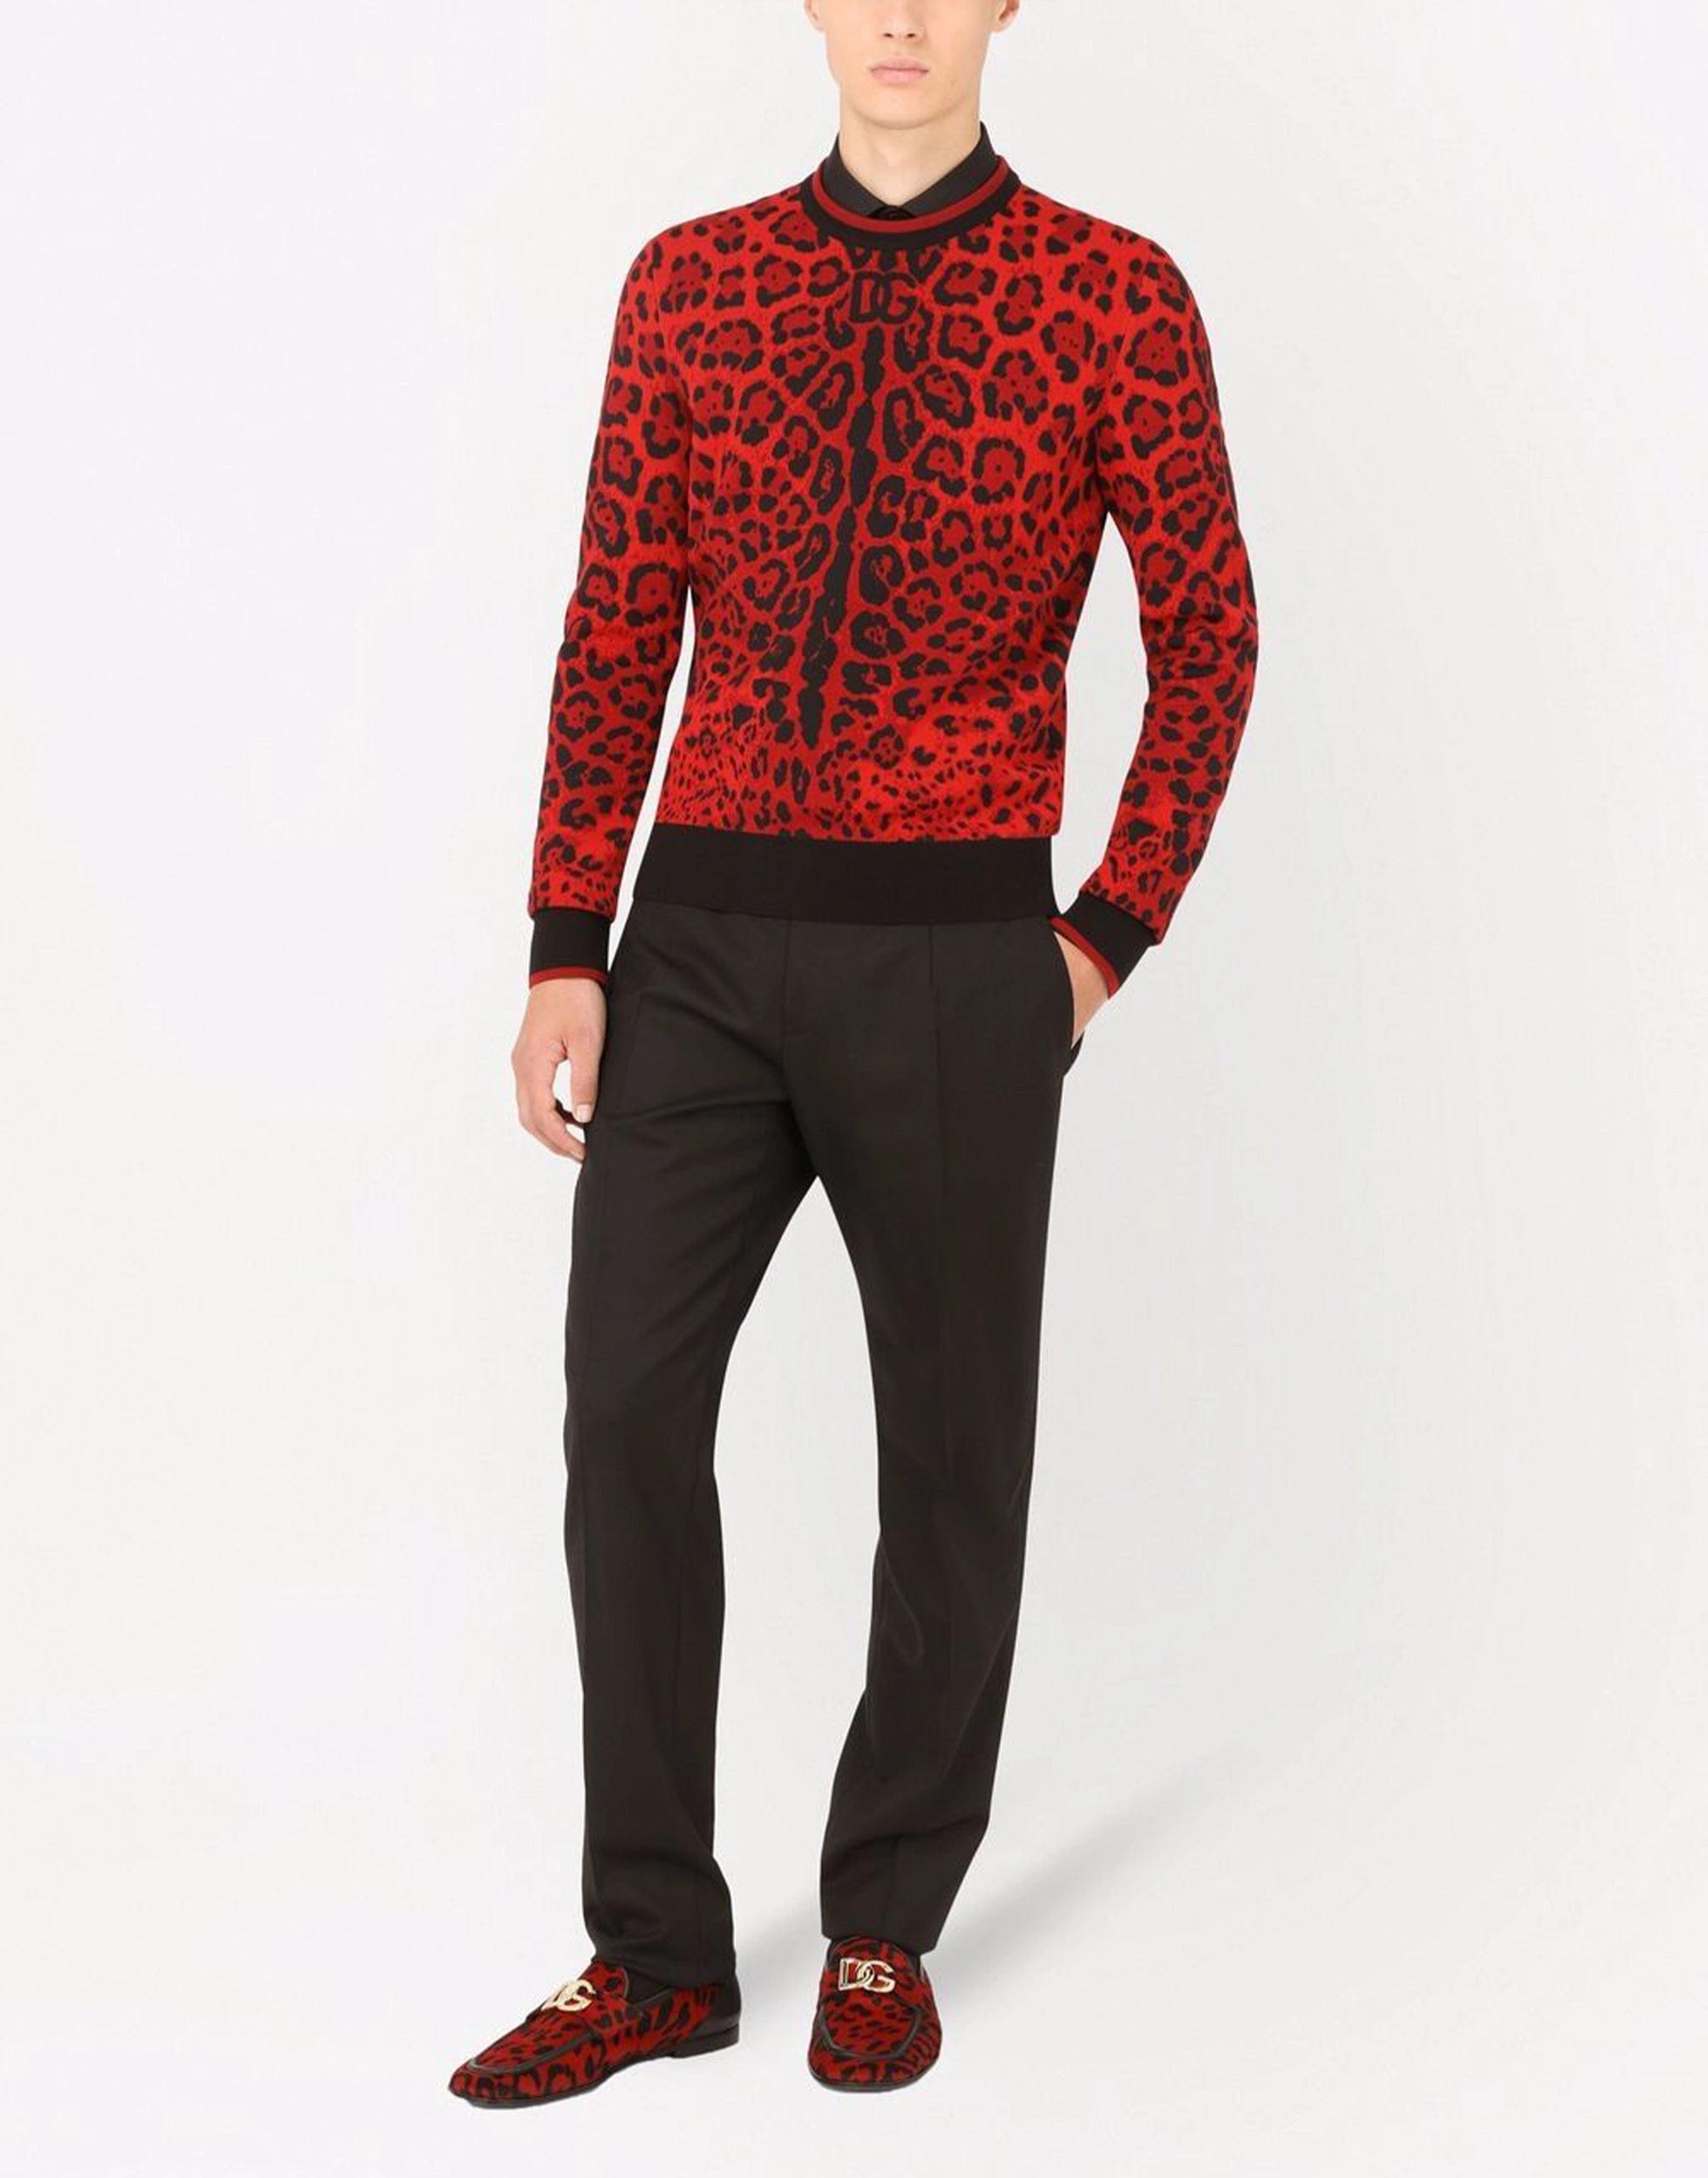 Dolce & Gabbana Leopard-Print Sweater